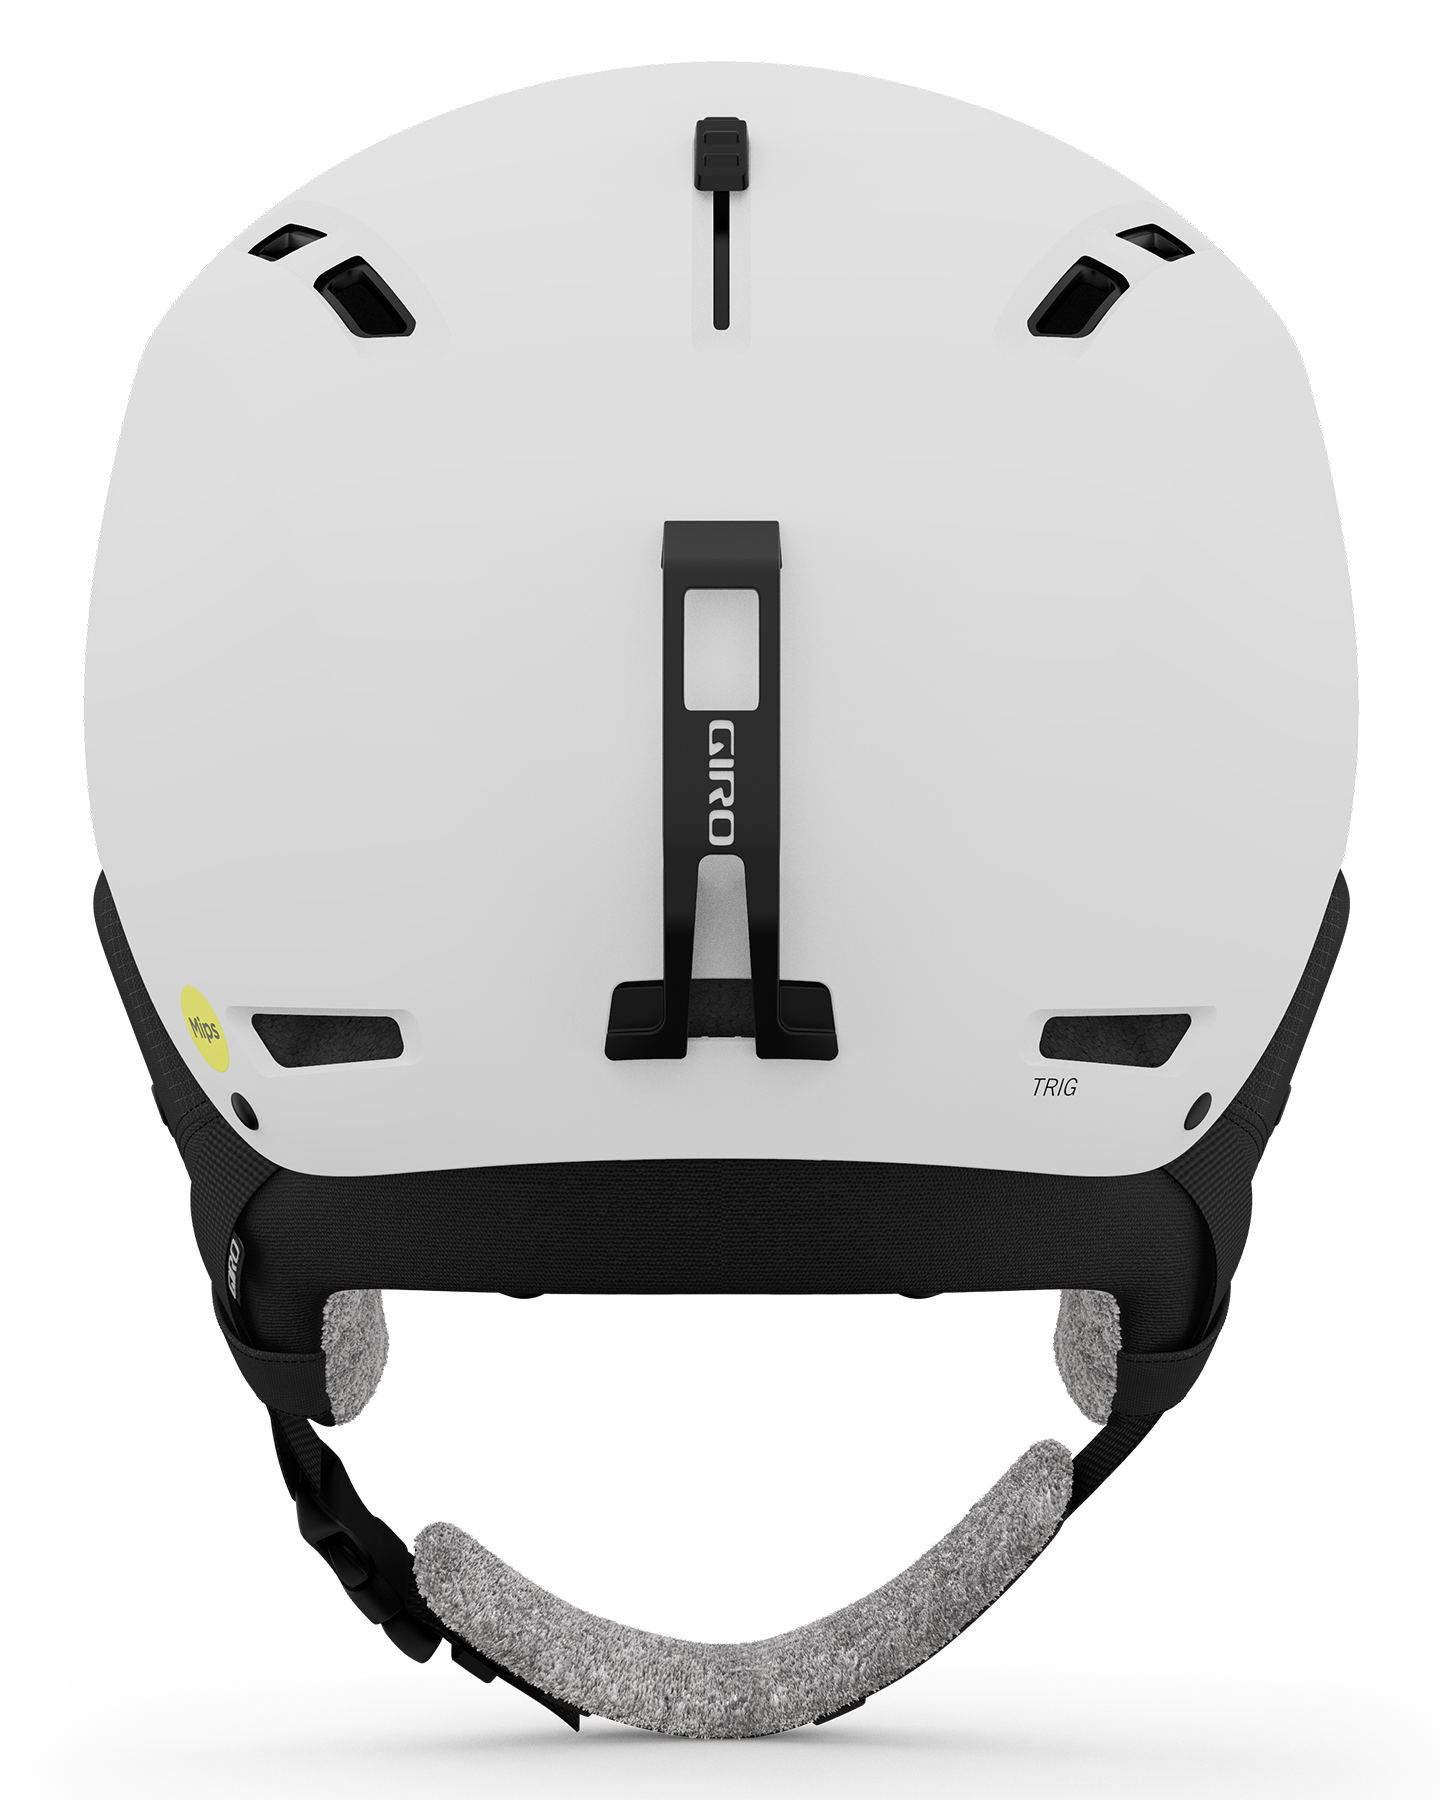 Giro Trig Mips Snow Helmet Men's Snow Helmets - SnowSkiersWarehouse